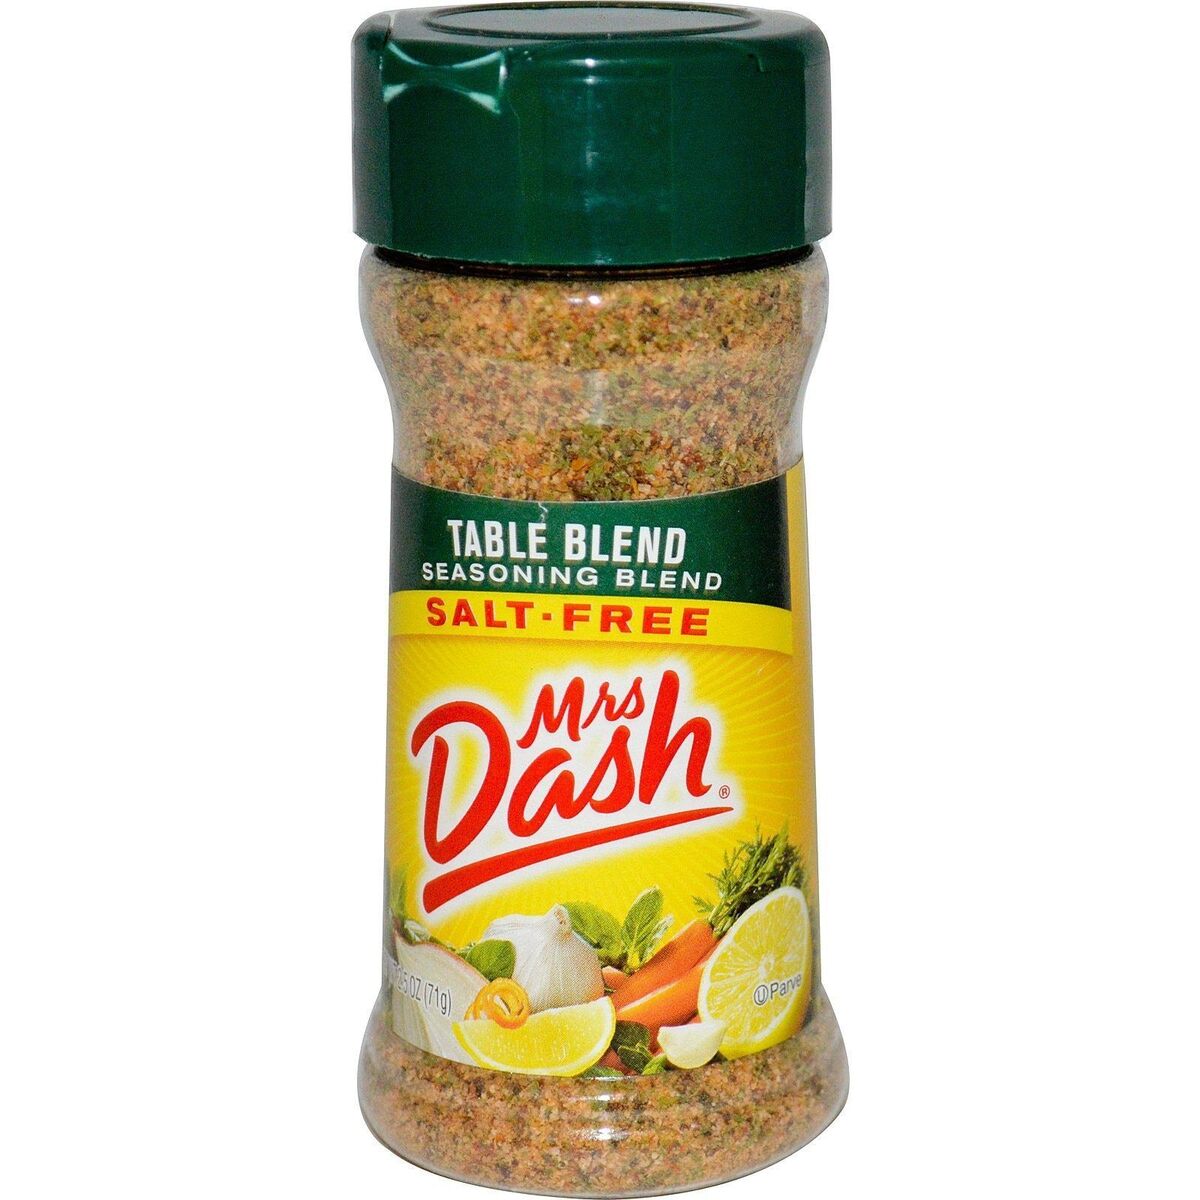 Mrs. Dash Seasoning Blend, Table Blend 2.5 oz